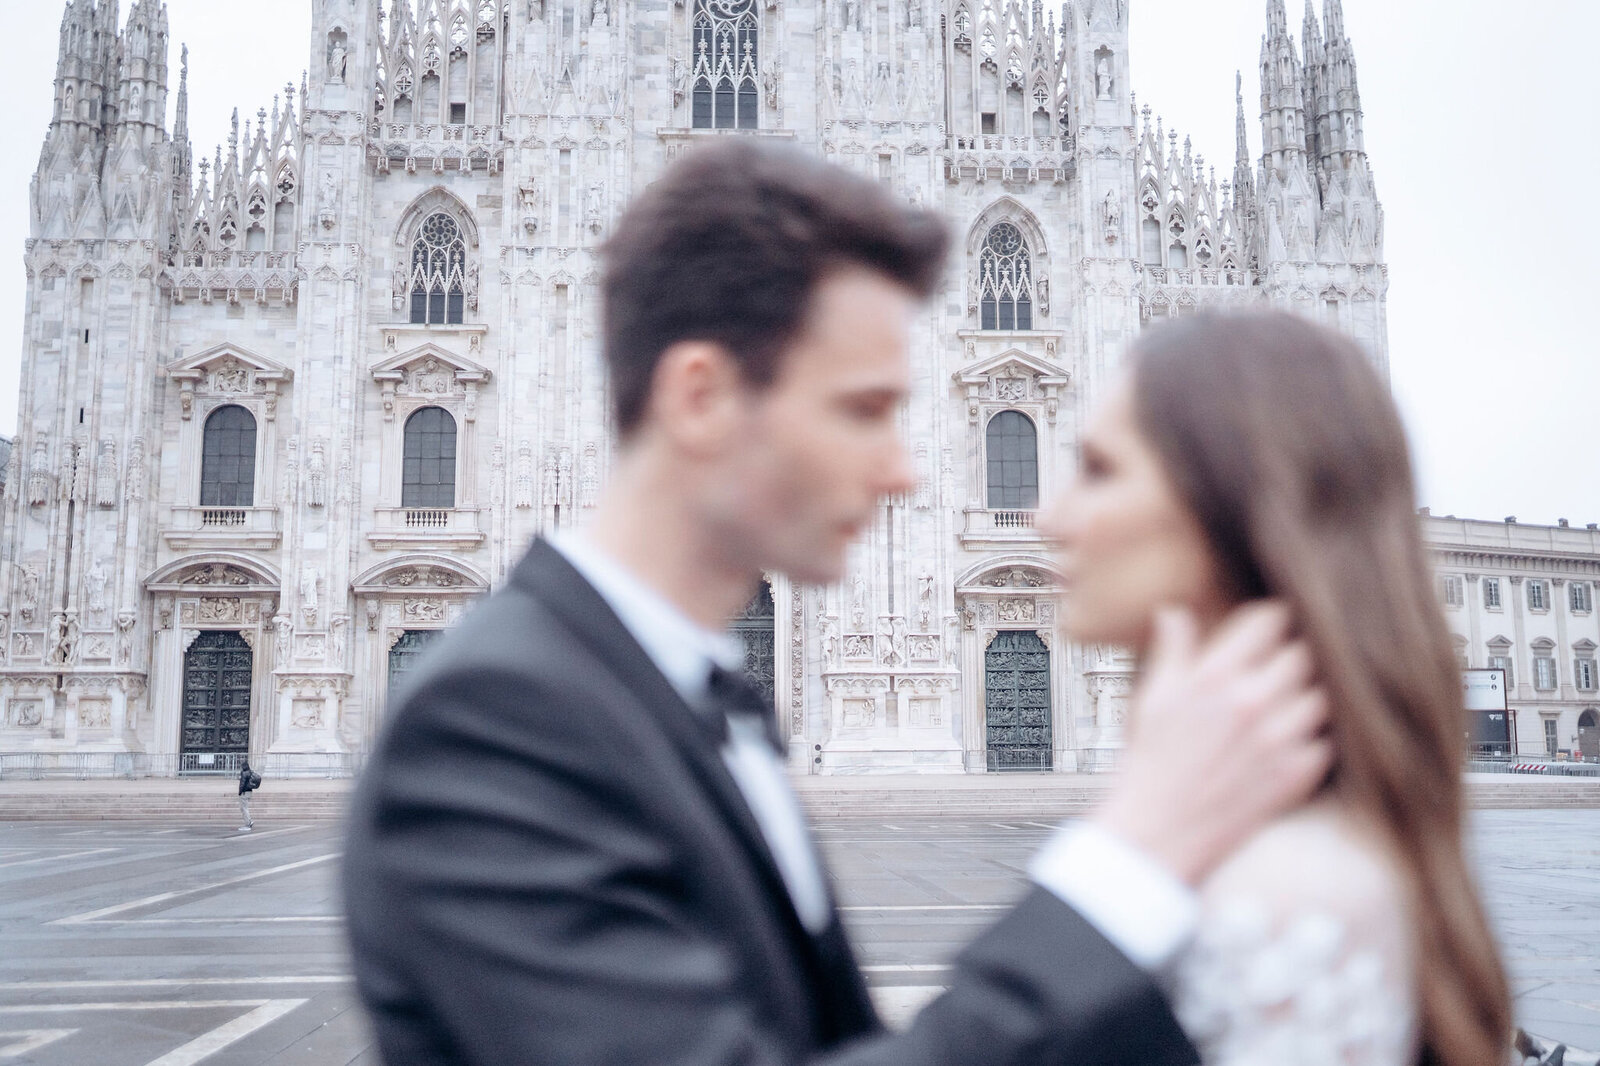 013-Milan-Duomo-Inspiration-Love-Story Elopement-Cinematic-Romance-Destination-Wedding-Editorial-Luxury-Fine-Art-Lisa-Vigliotta-Photography